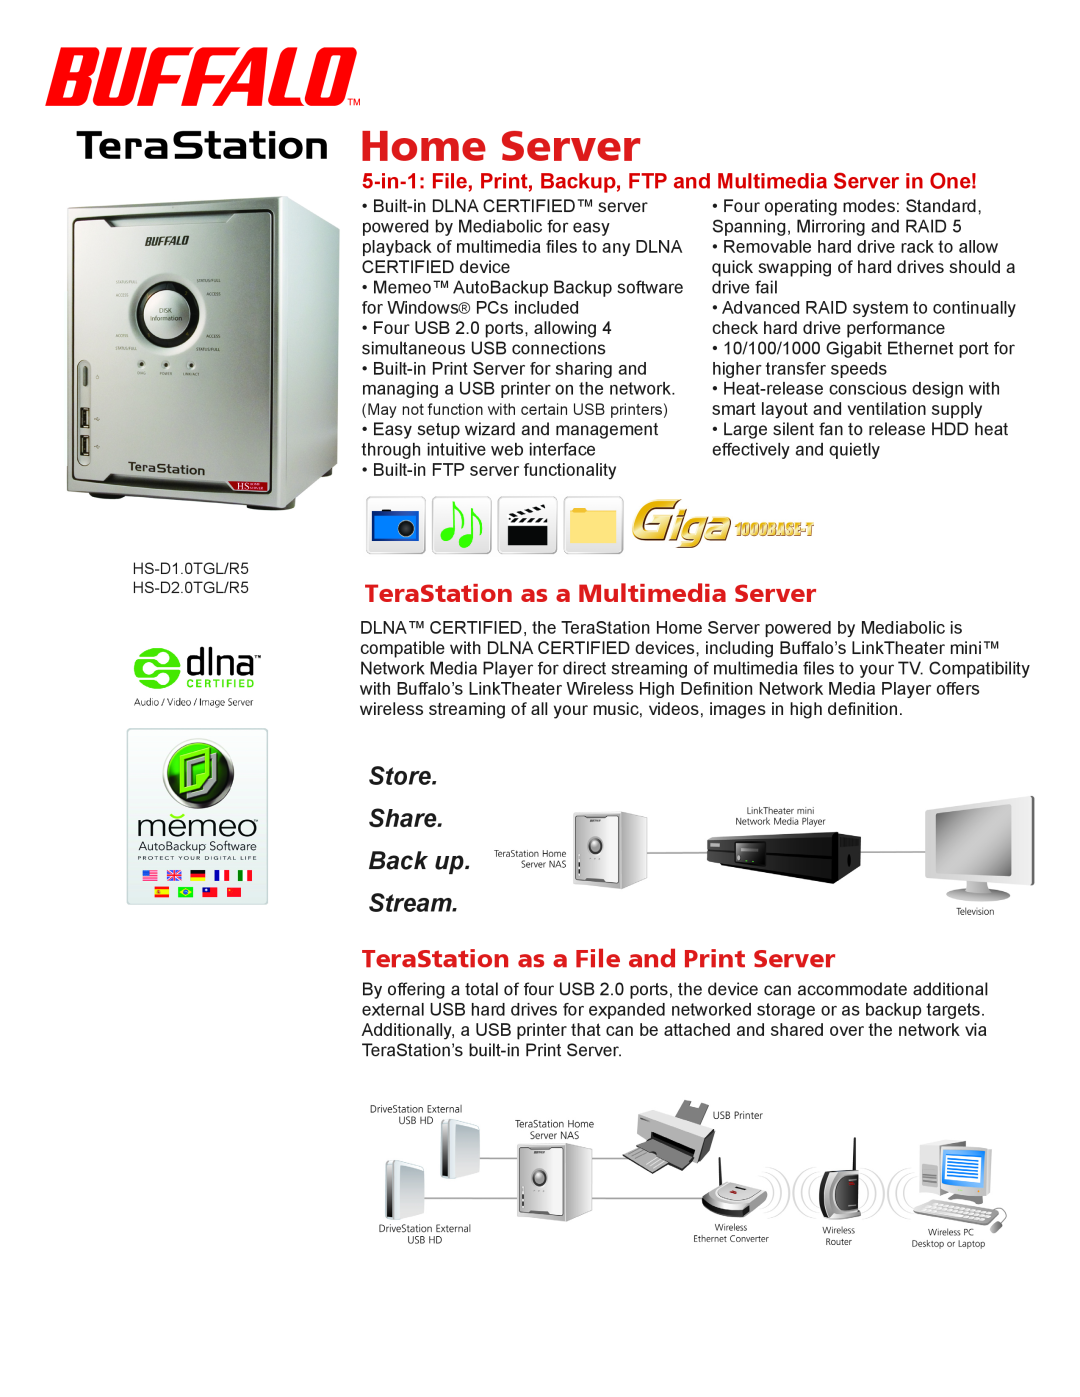 Buffalo Technology HS-D1.0TGL/R5 manual Home Server, TeraStation as a Multimedia Server, Store Share Back up Stream 